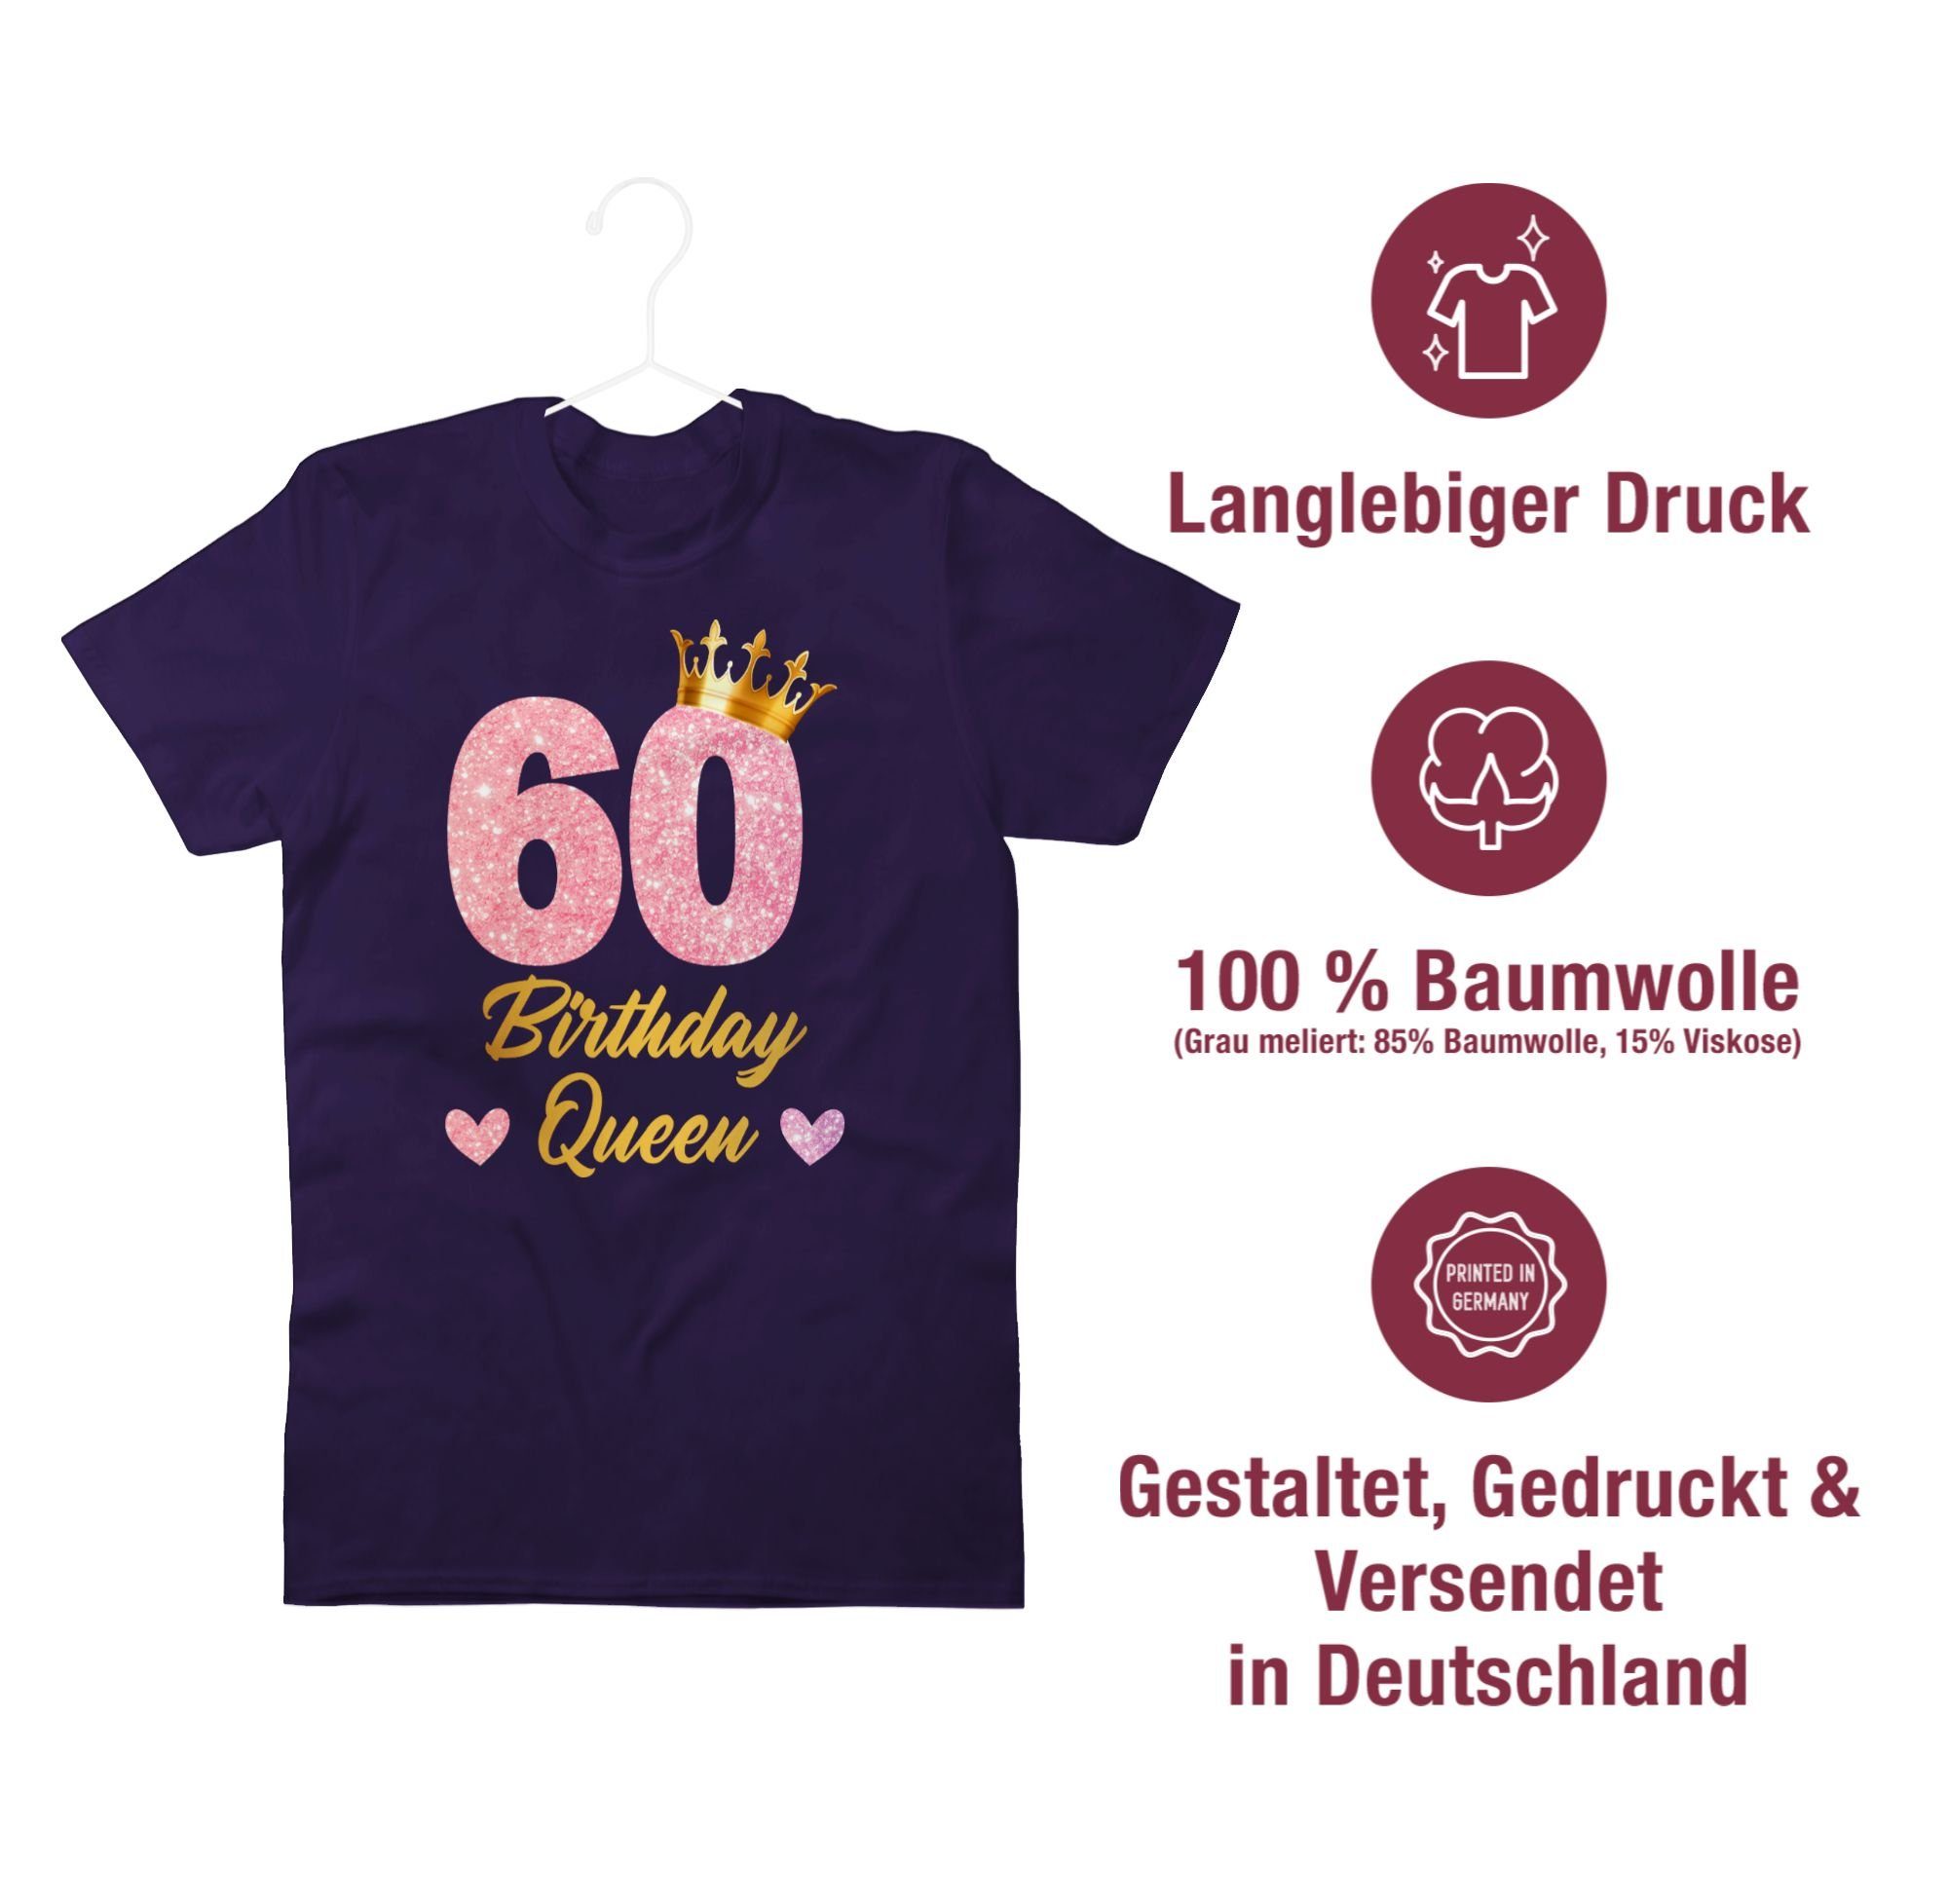 Shirtracer T-Shirt 60 Queen 03 Lila 60. 60 Geburtstags Königin Birthday Geburtstagsgeschenk Geburtstag